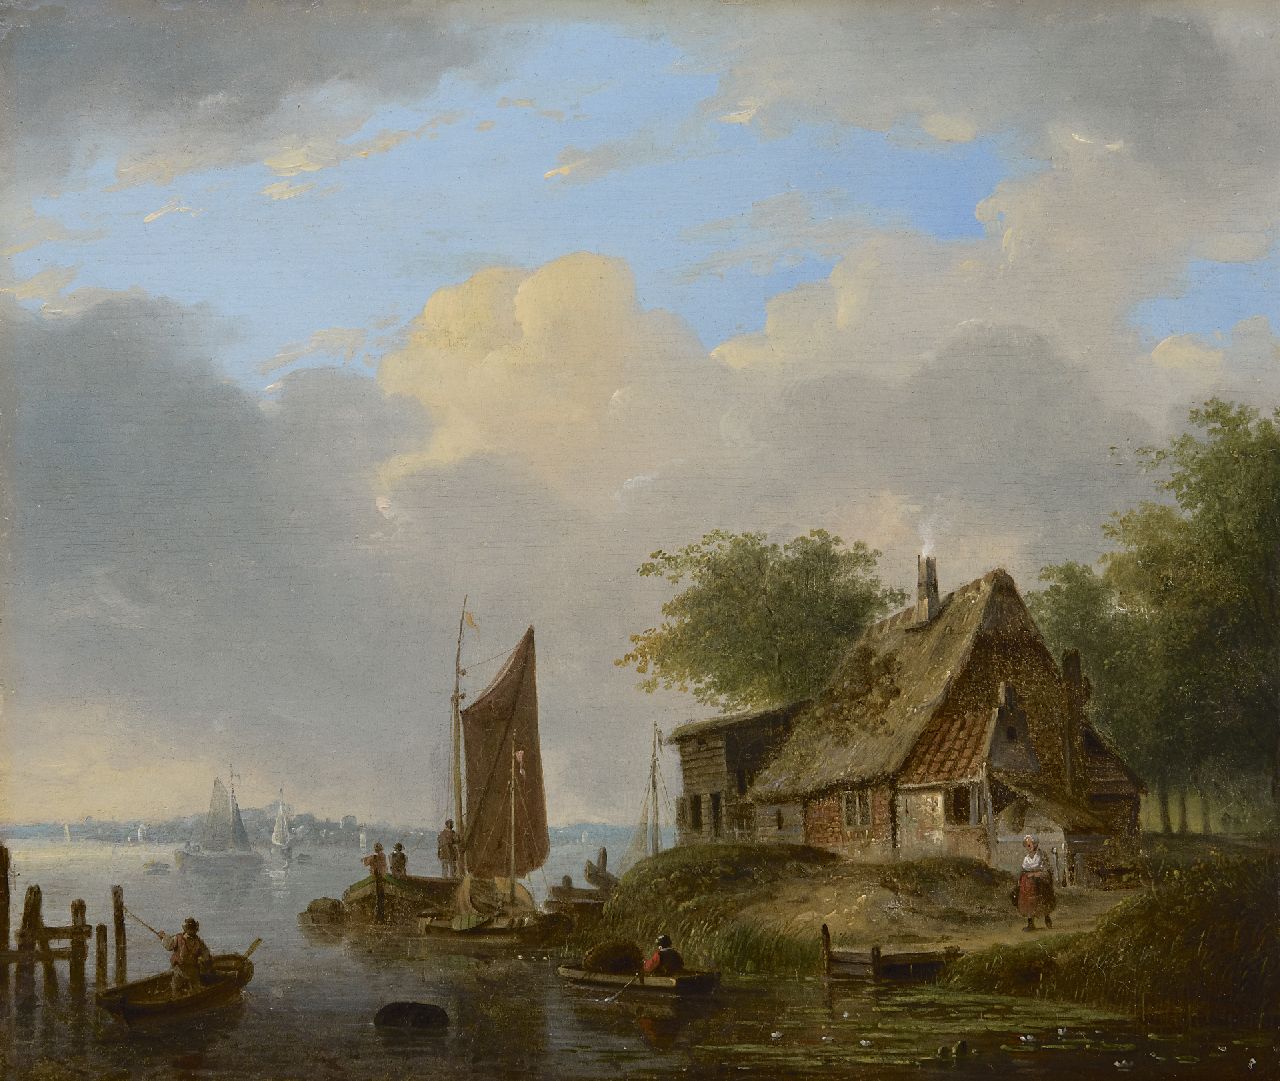 Stok J. van der | Jacobus van der Stok, A sunny river landscape, oil on panel 26.6 x 31.7 cm